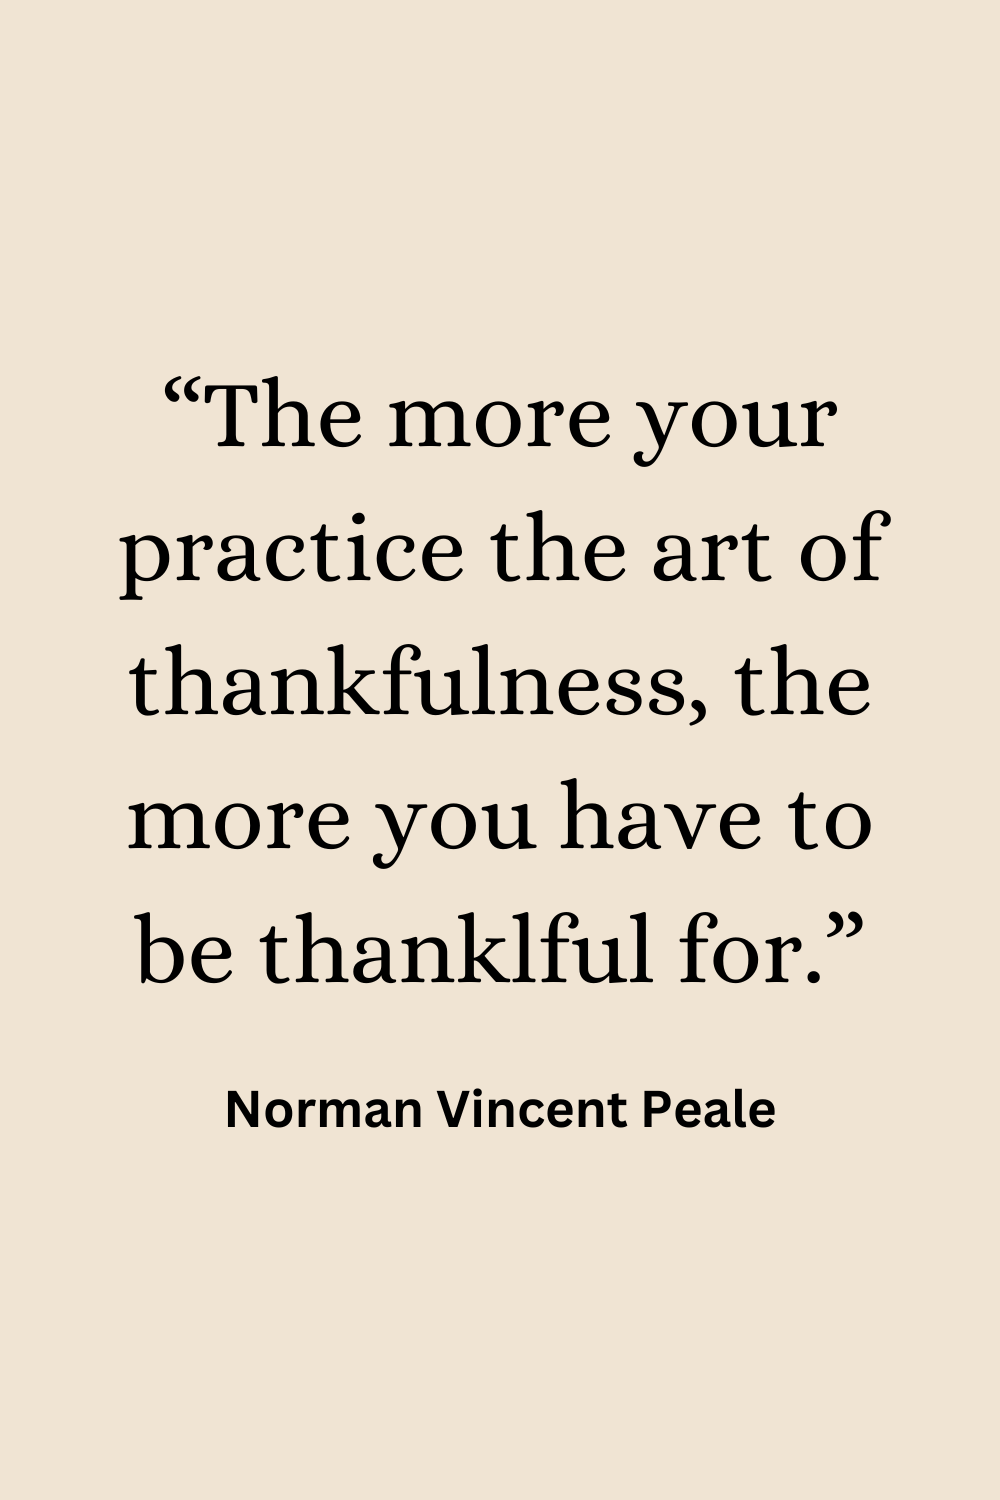 gratitude journal, thankful, mindfulness, self care